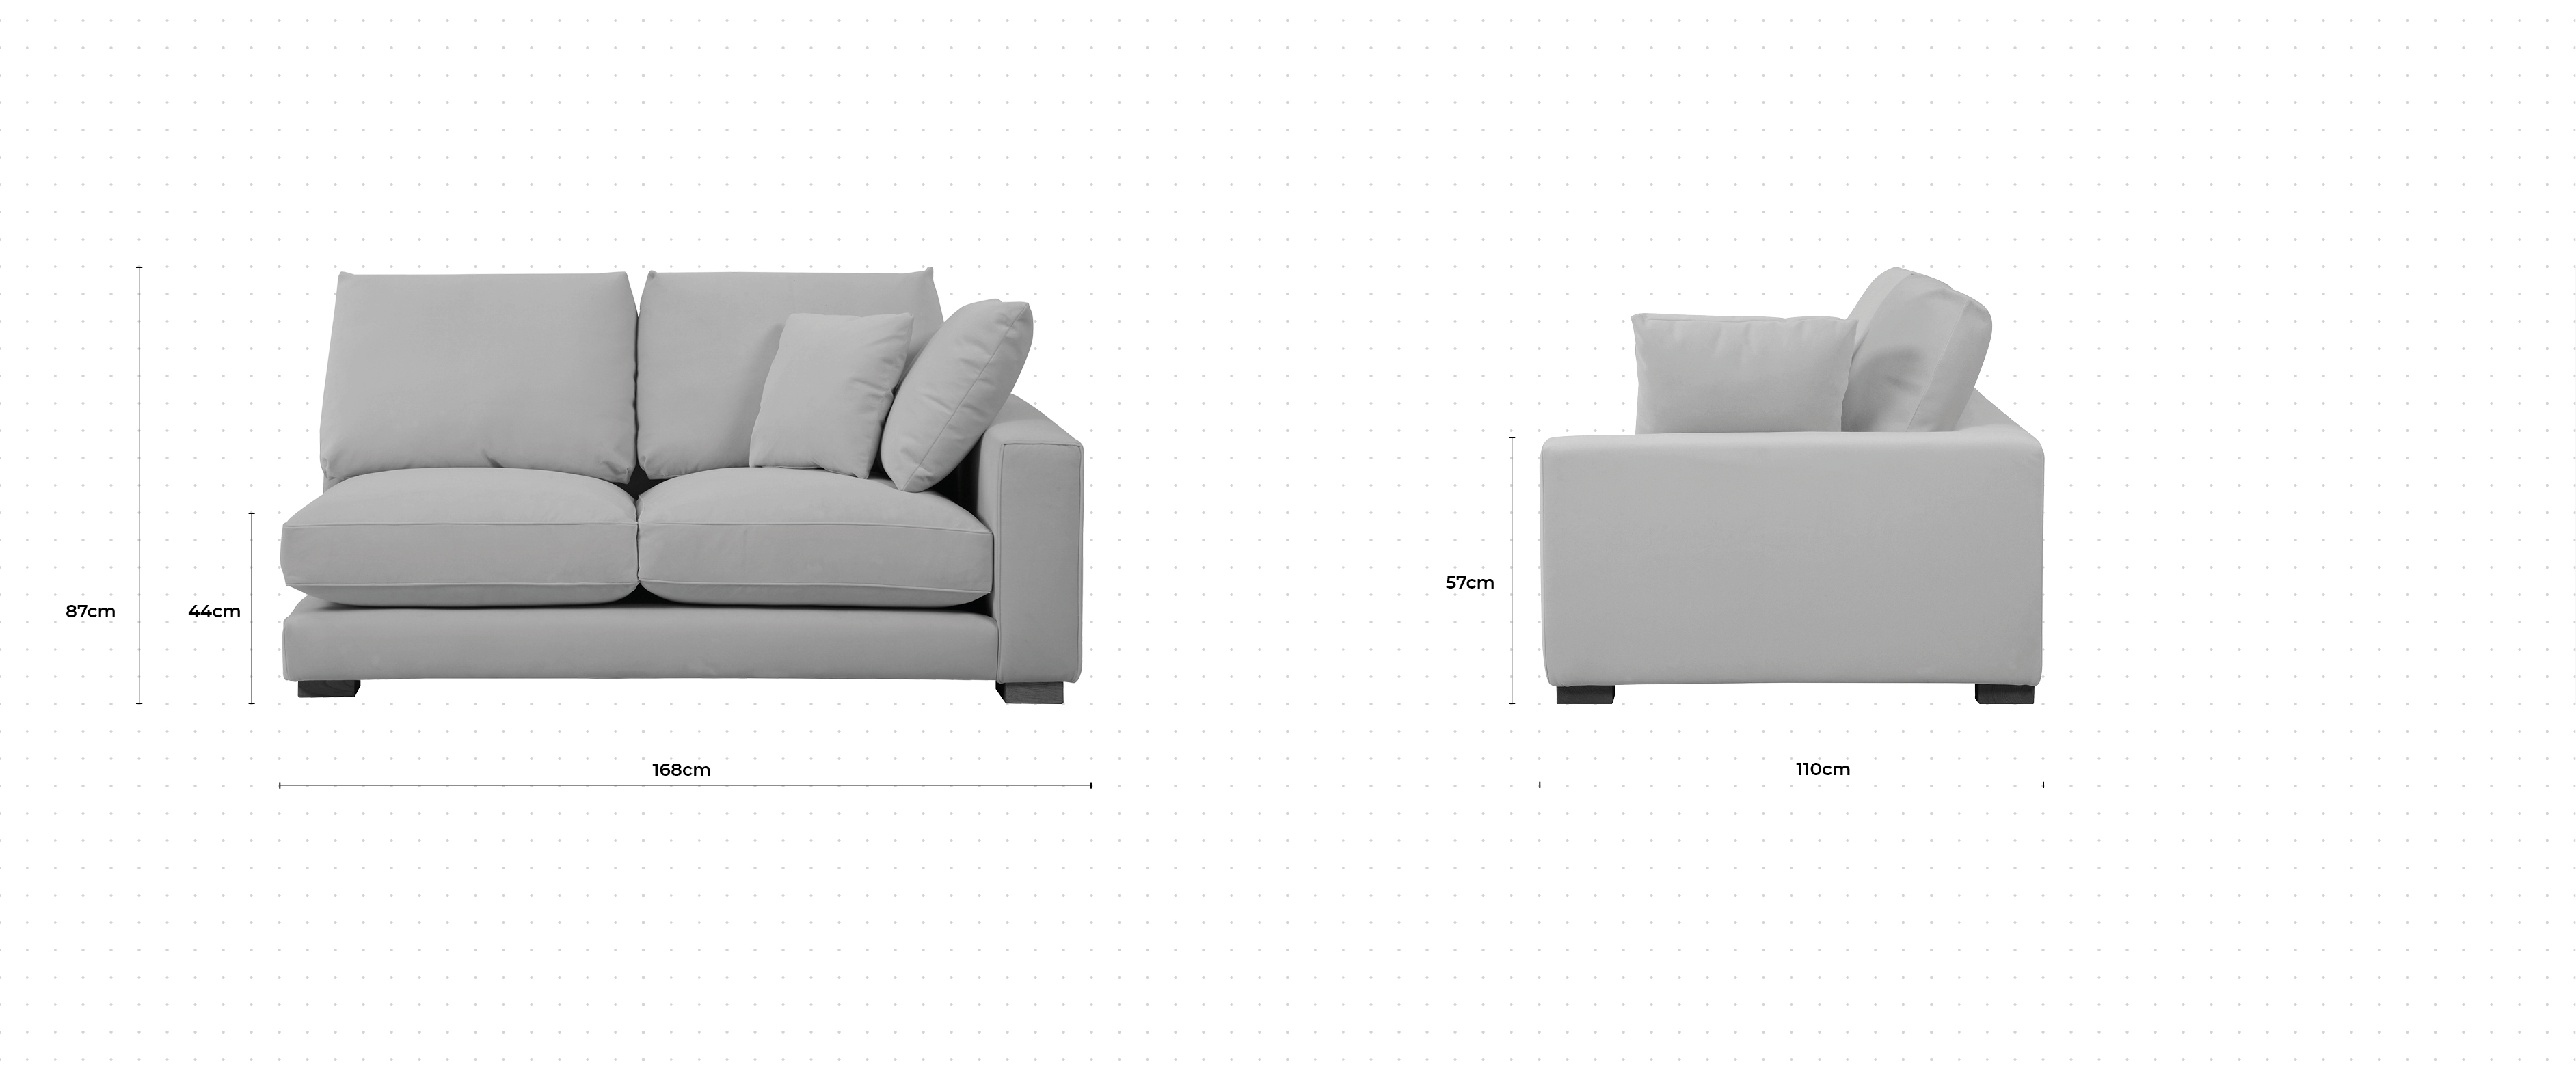 Dillon 2 Seater Sofa RHF dimensions